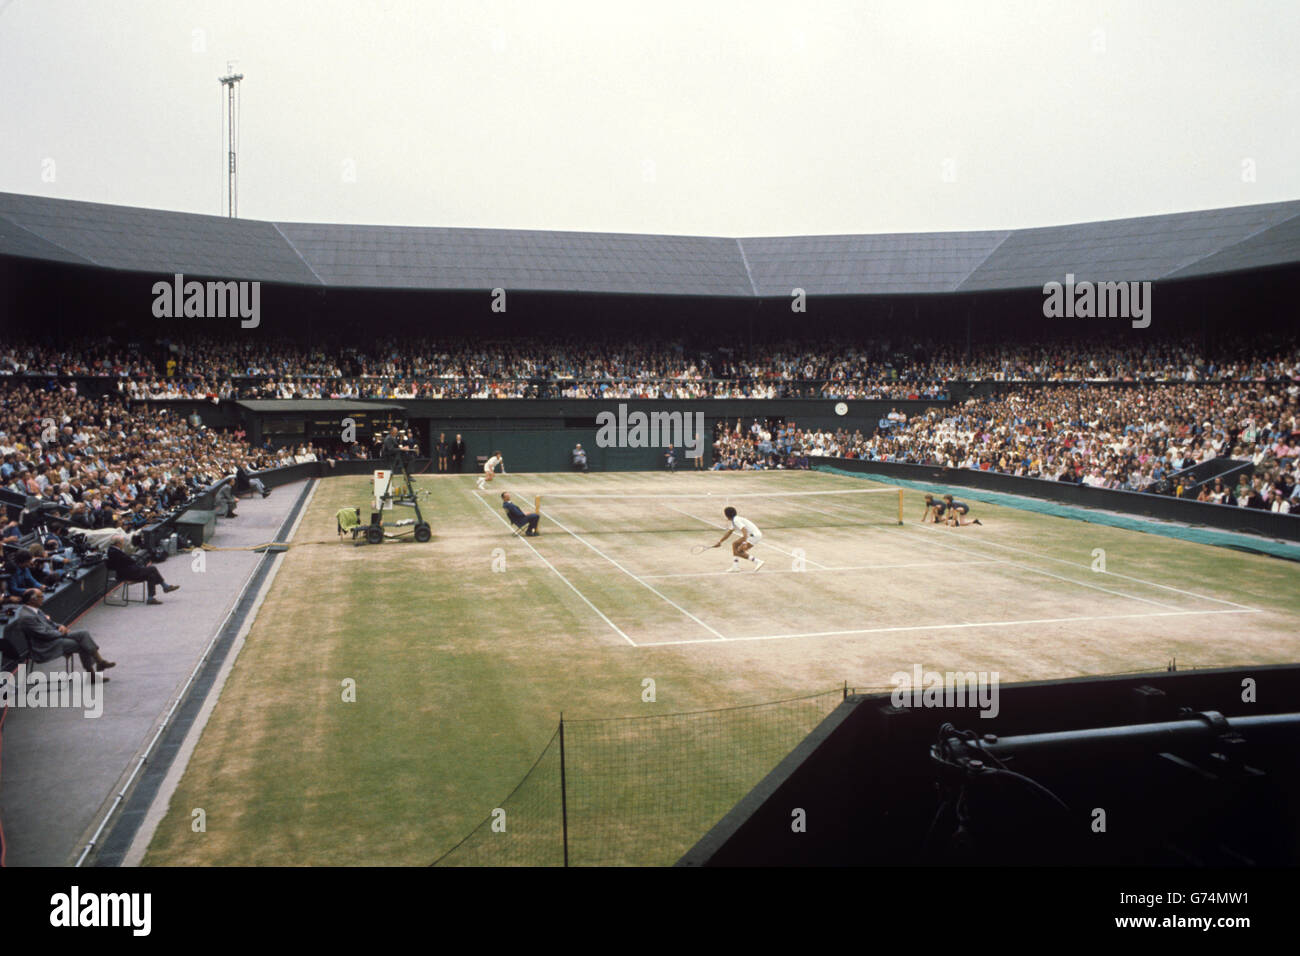 Tennis - Wimbledon - Men's Singles Final - Jimmy Connors / Arthur Ashe - Centre Court. Jimmy Connors e Arthur Ashe in azione sul Centre Court. Foto Stock